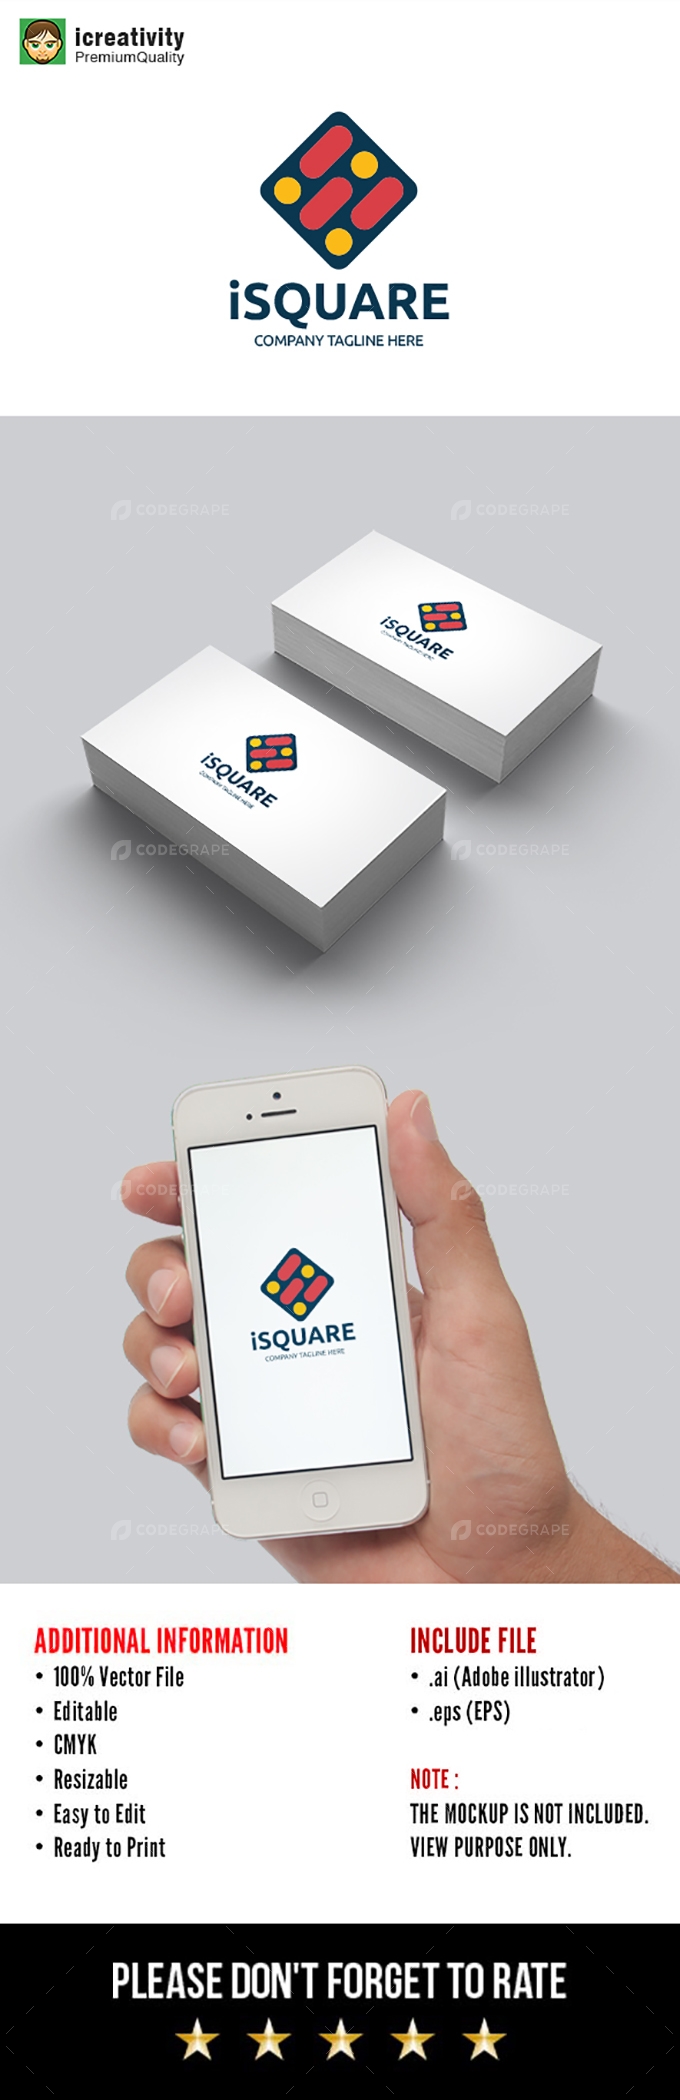 Isqaure logo